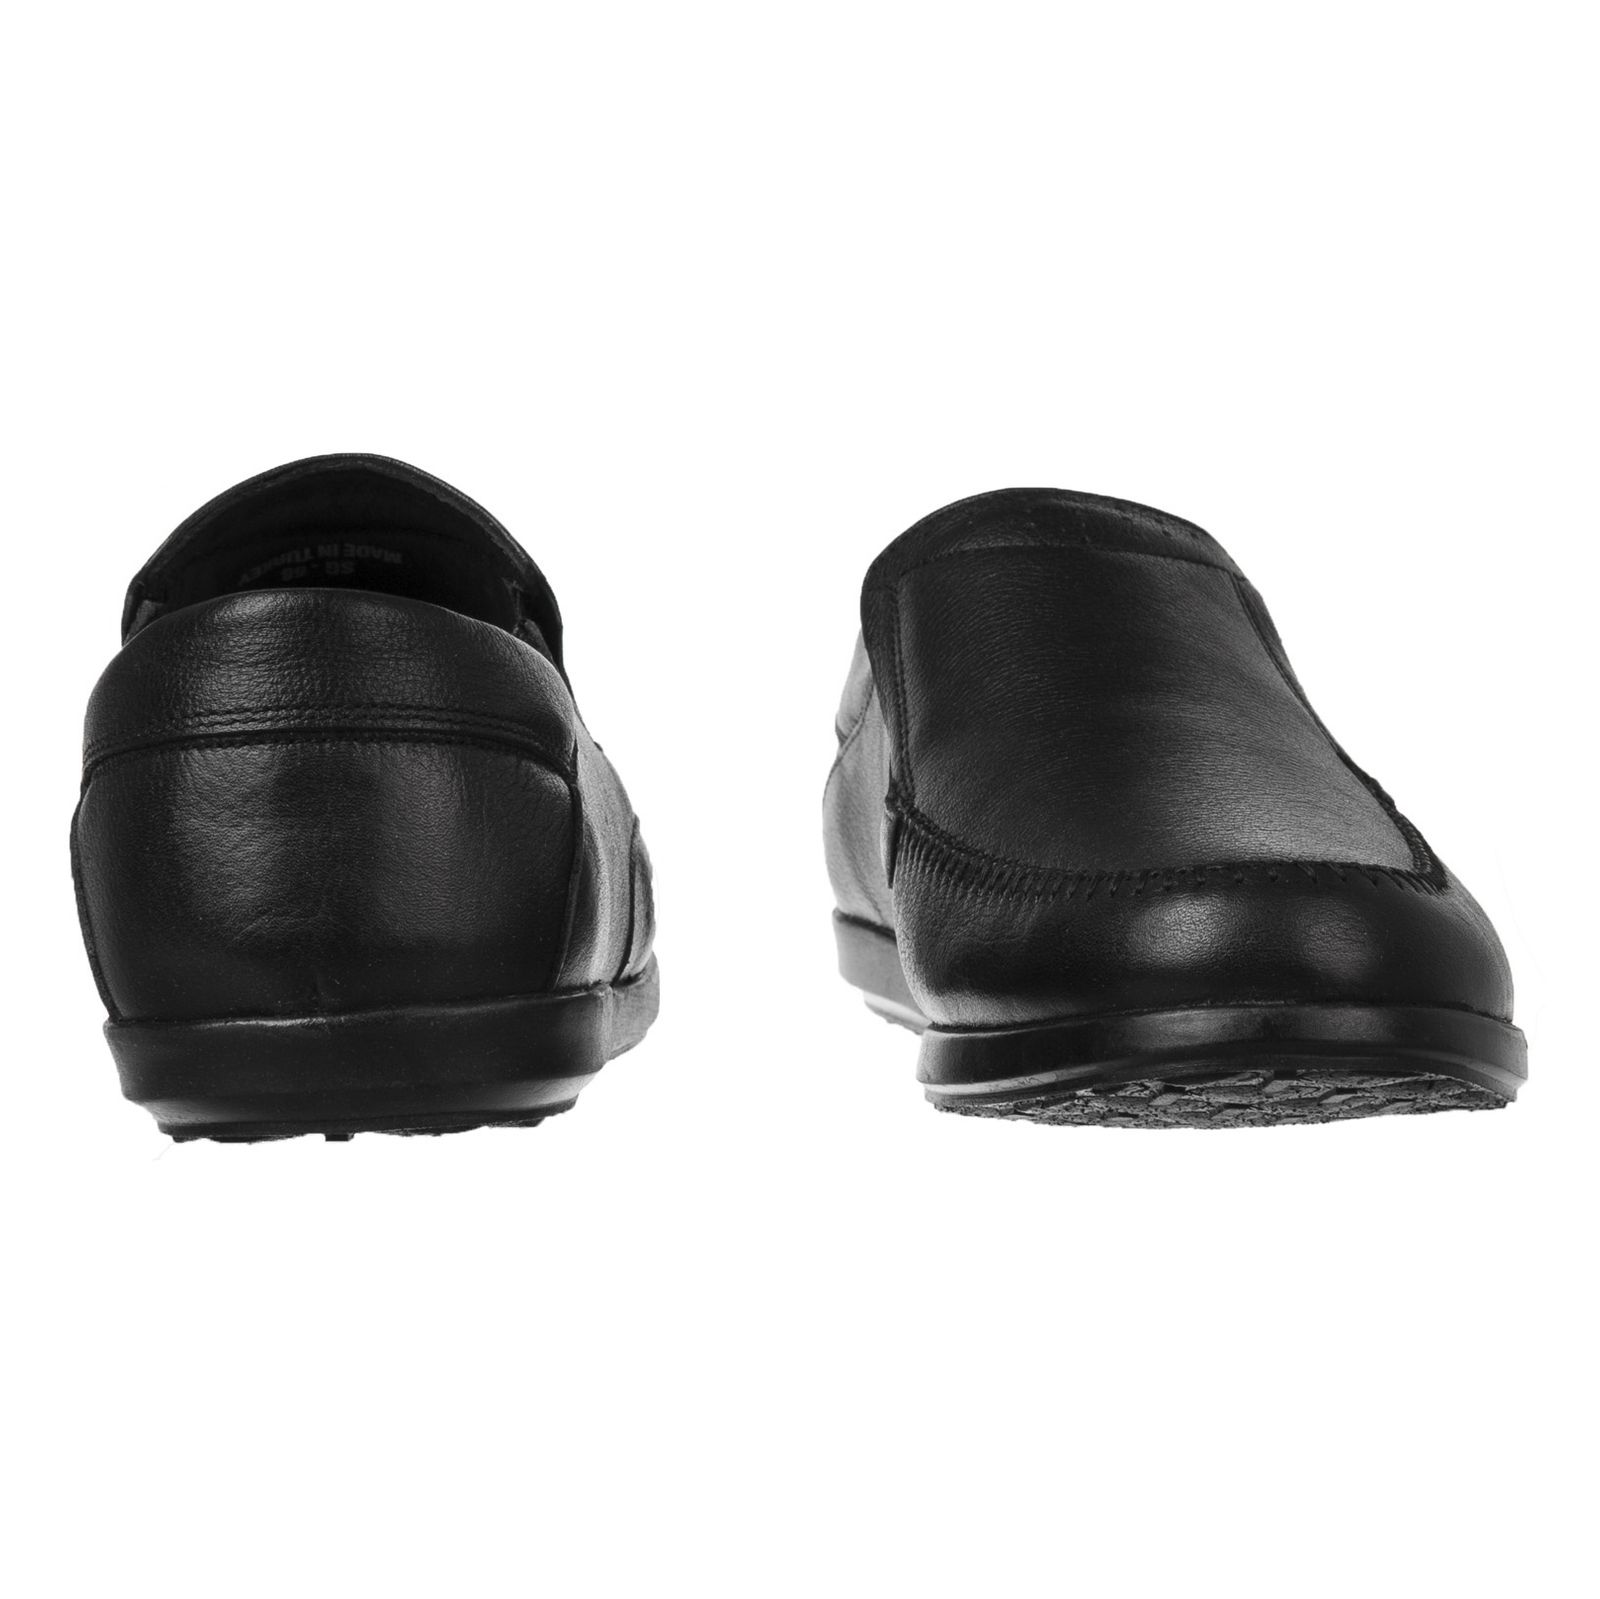 کفش روزمره مردانه فلوگارت مدل 100317221-101 - مشکی - 5